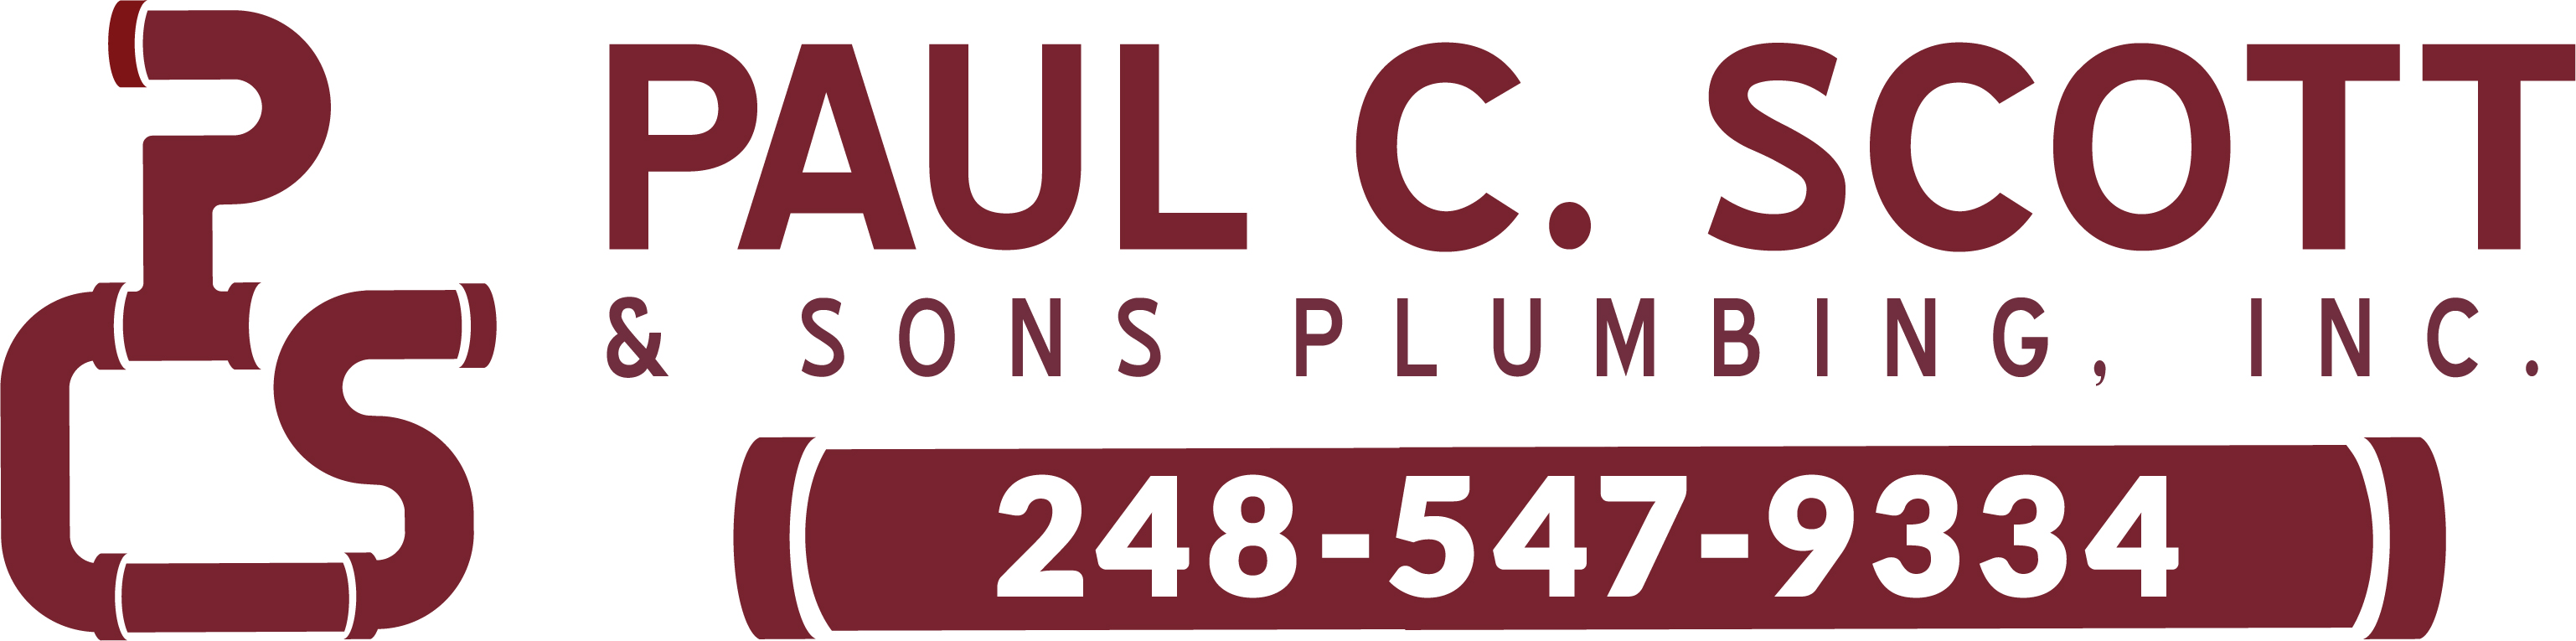 Paul C. Scott & Sons Plumbing, Inc.